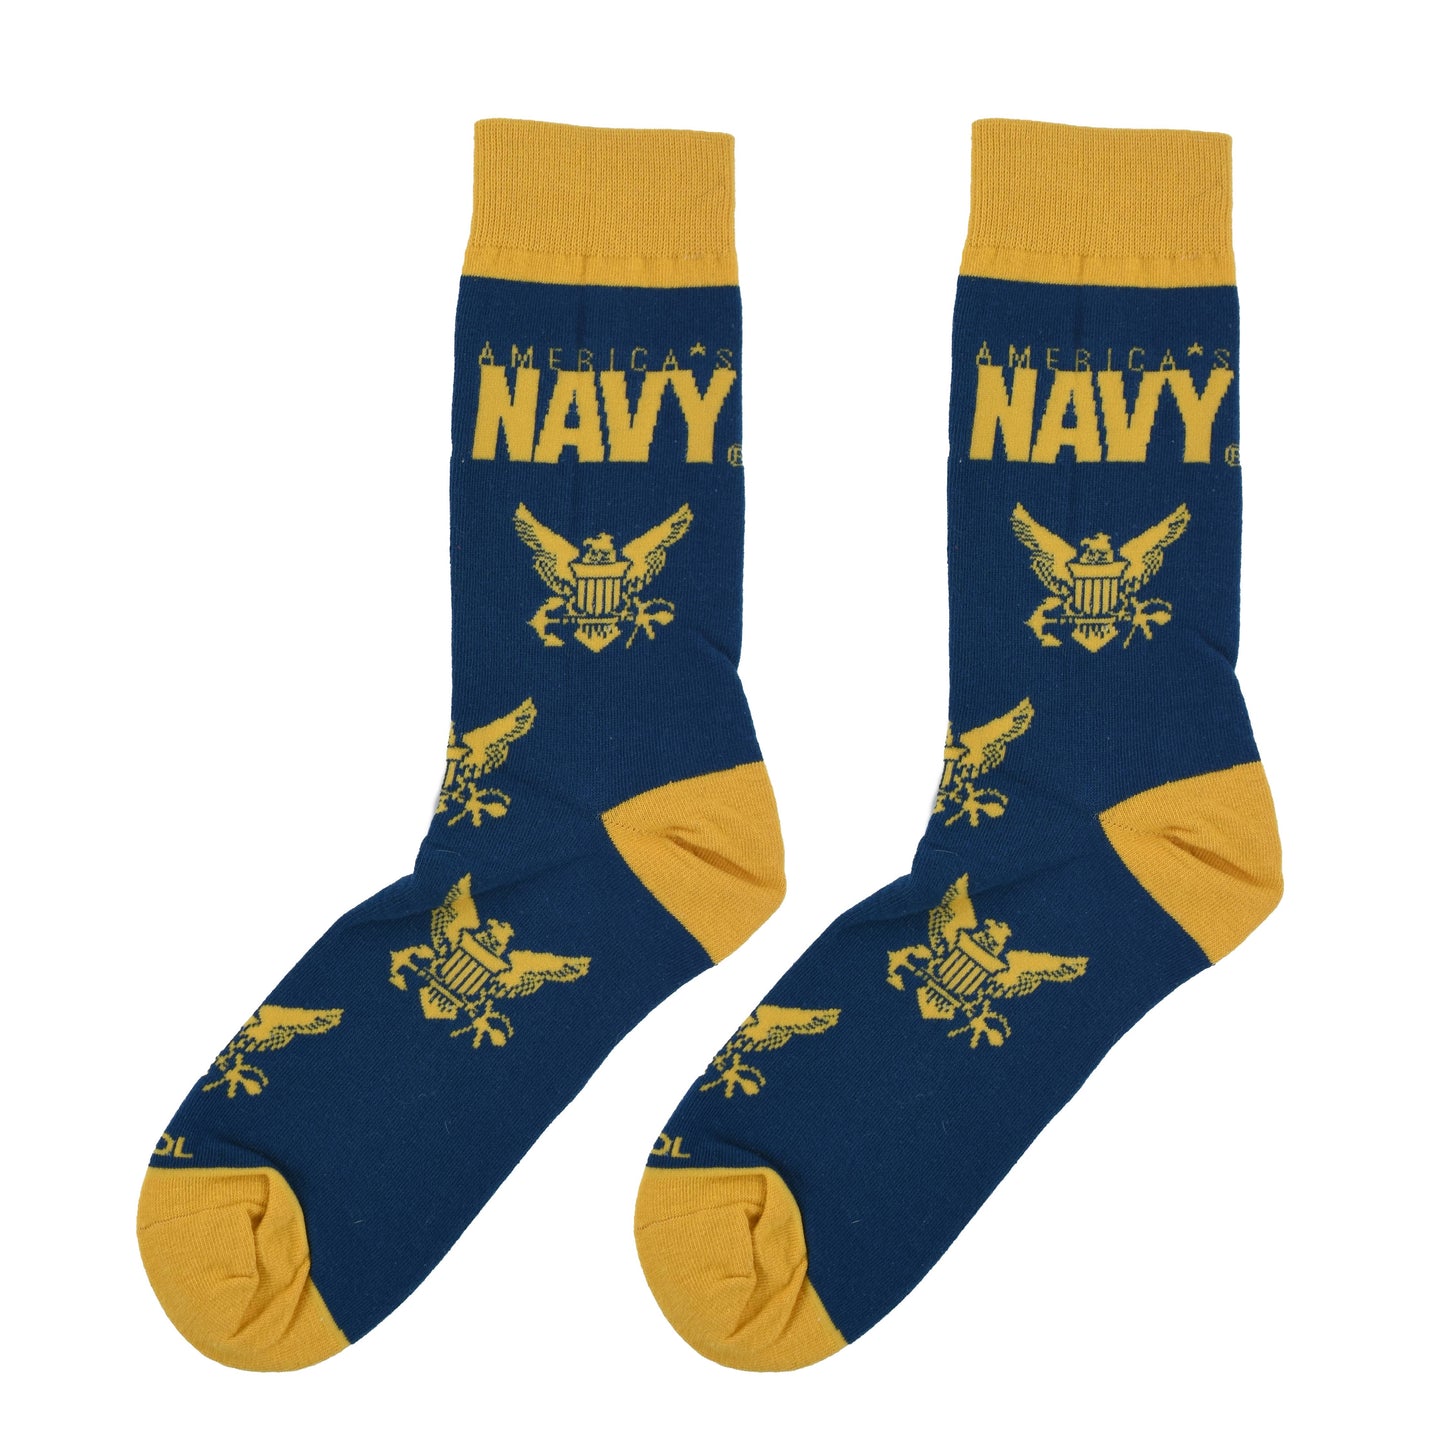 Americas Navy Socks